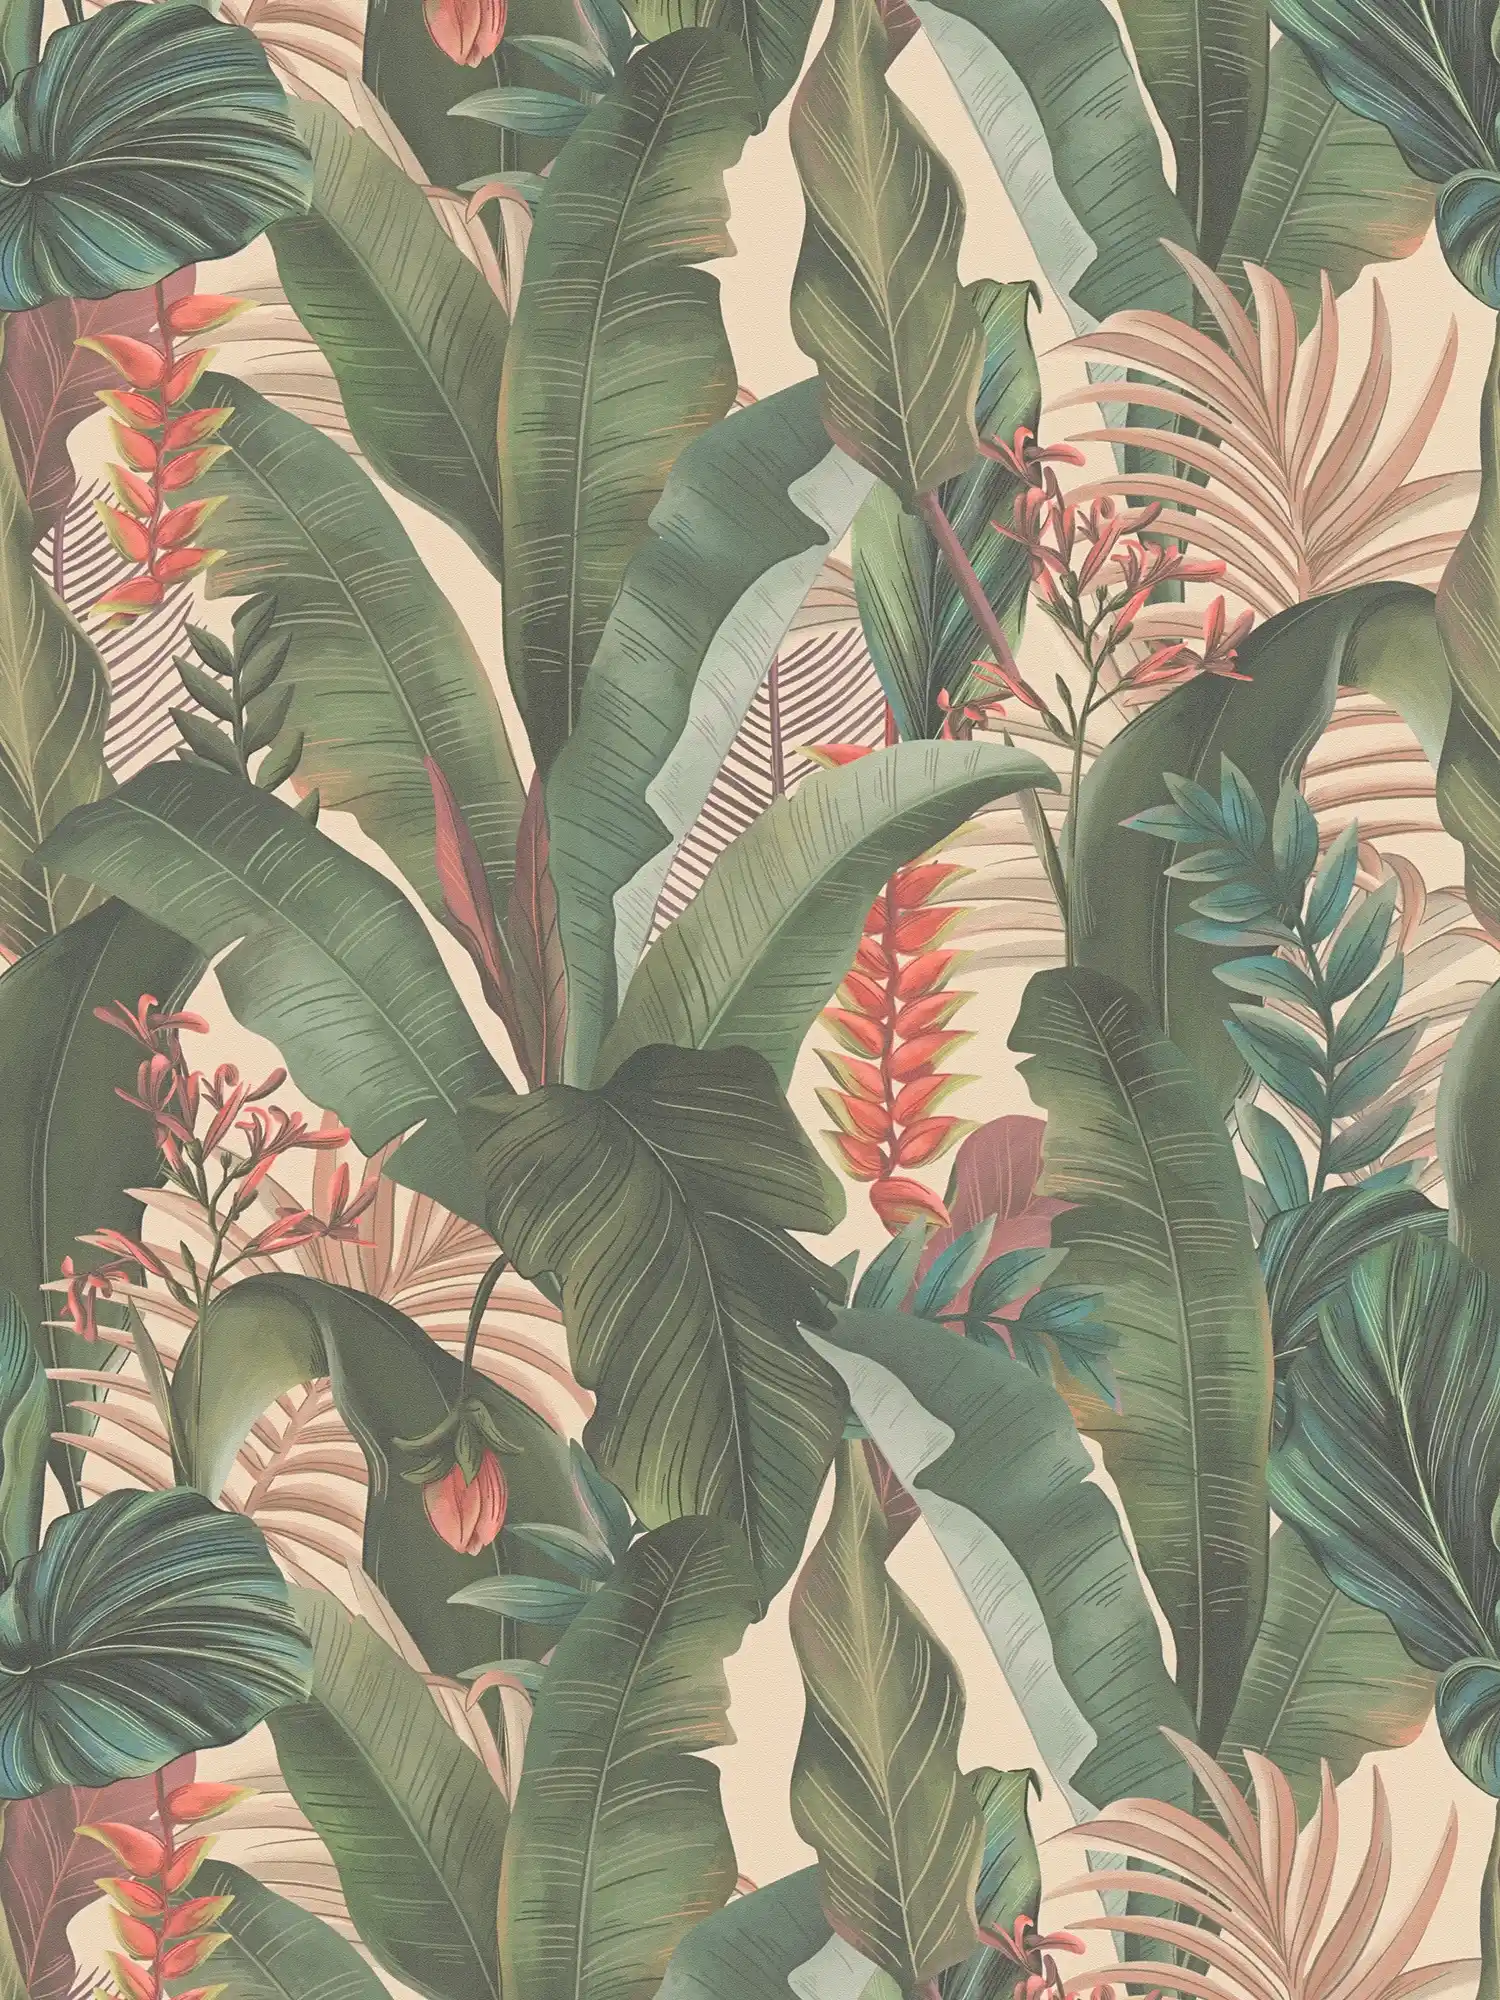         Carta da parati Jungle con foglie di palma e fiori in stile floreale opaco - Beige, Verde, Rosa
    